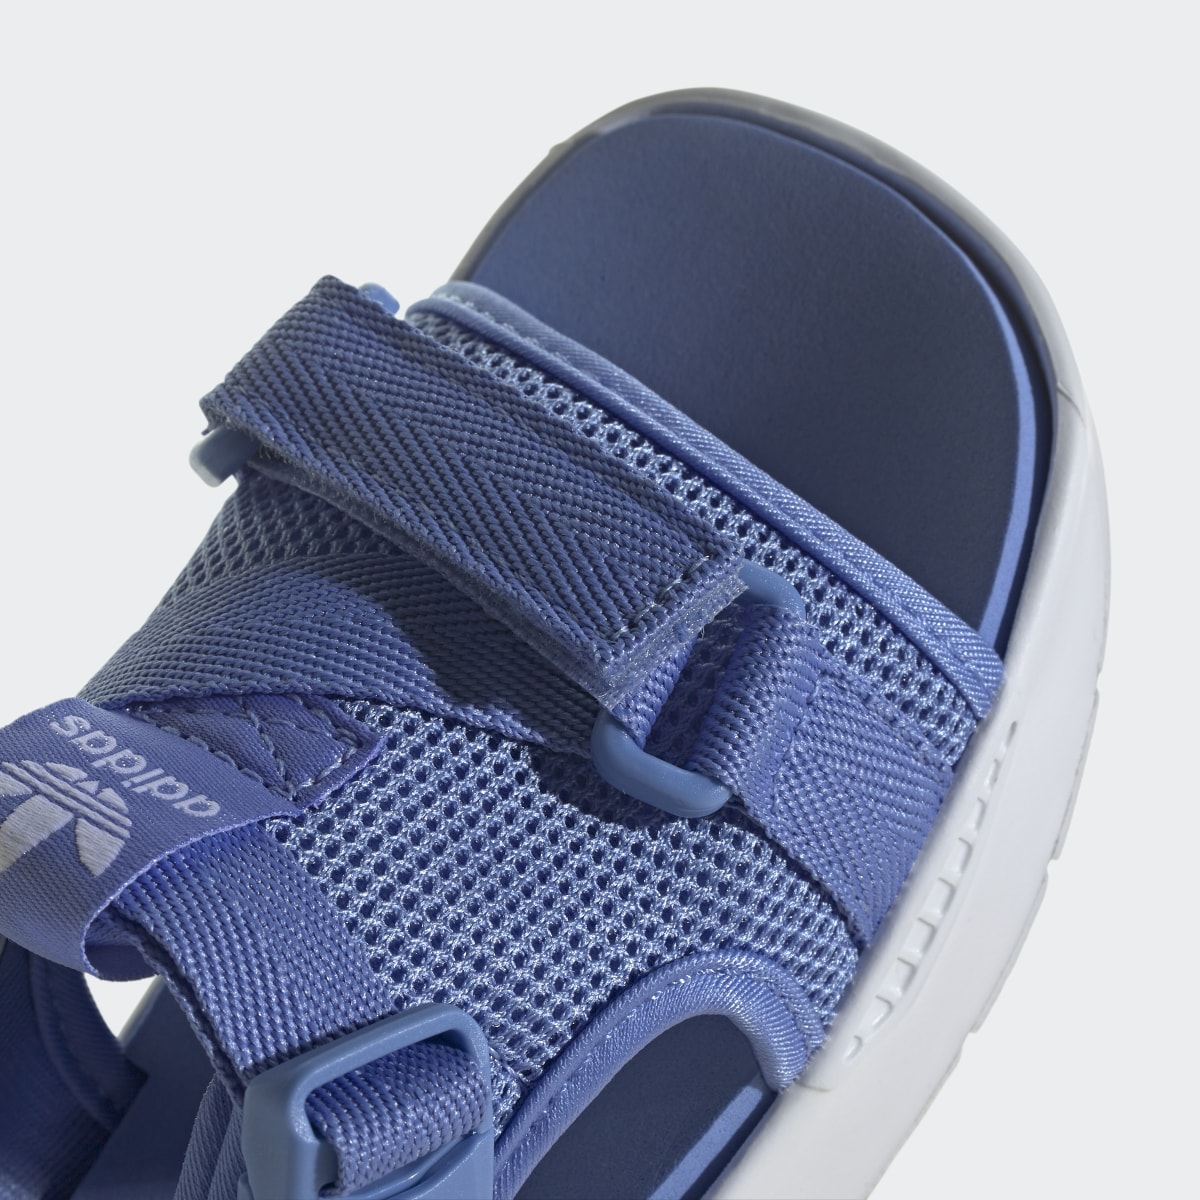 Adidas 360 3.0 Sandals. 9